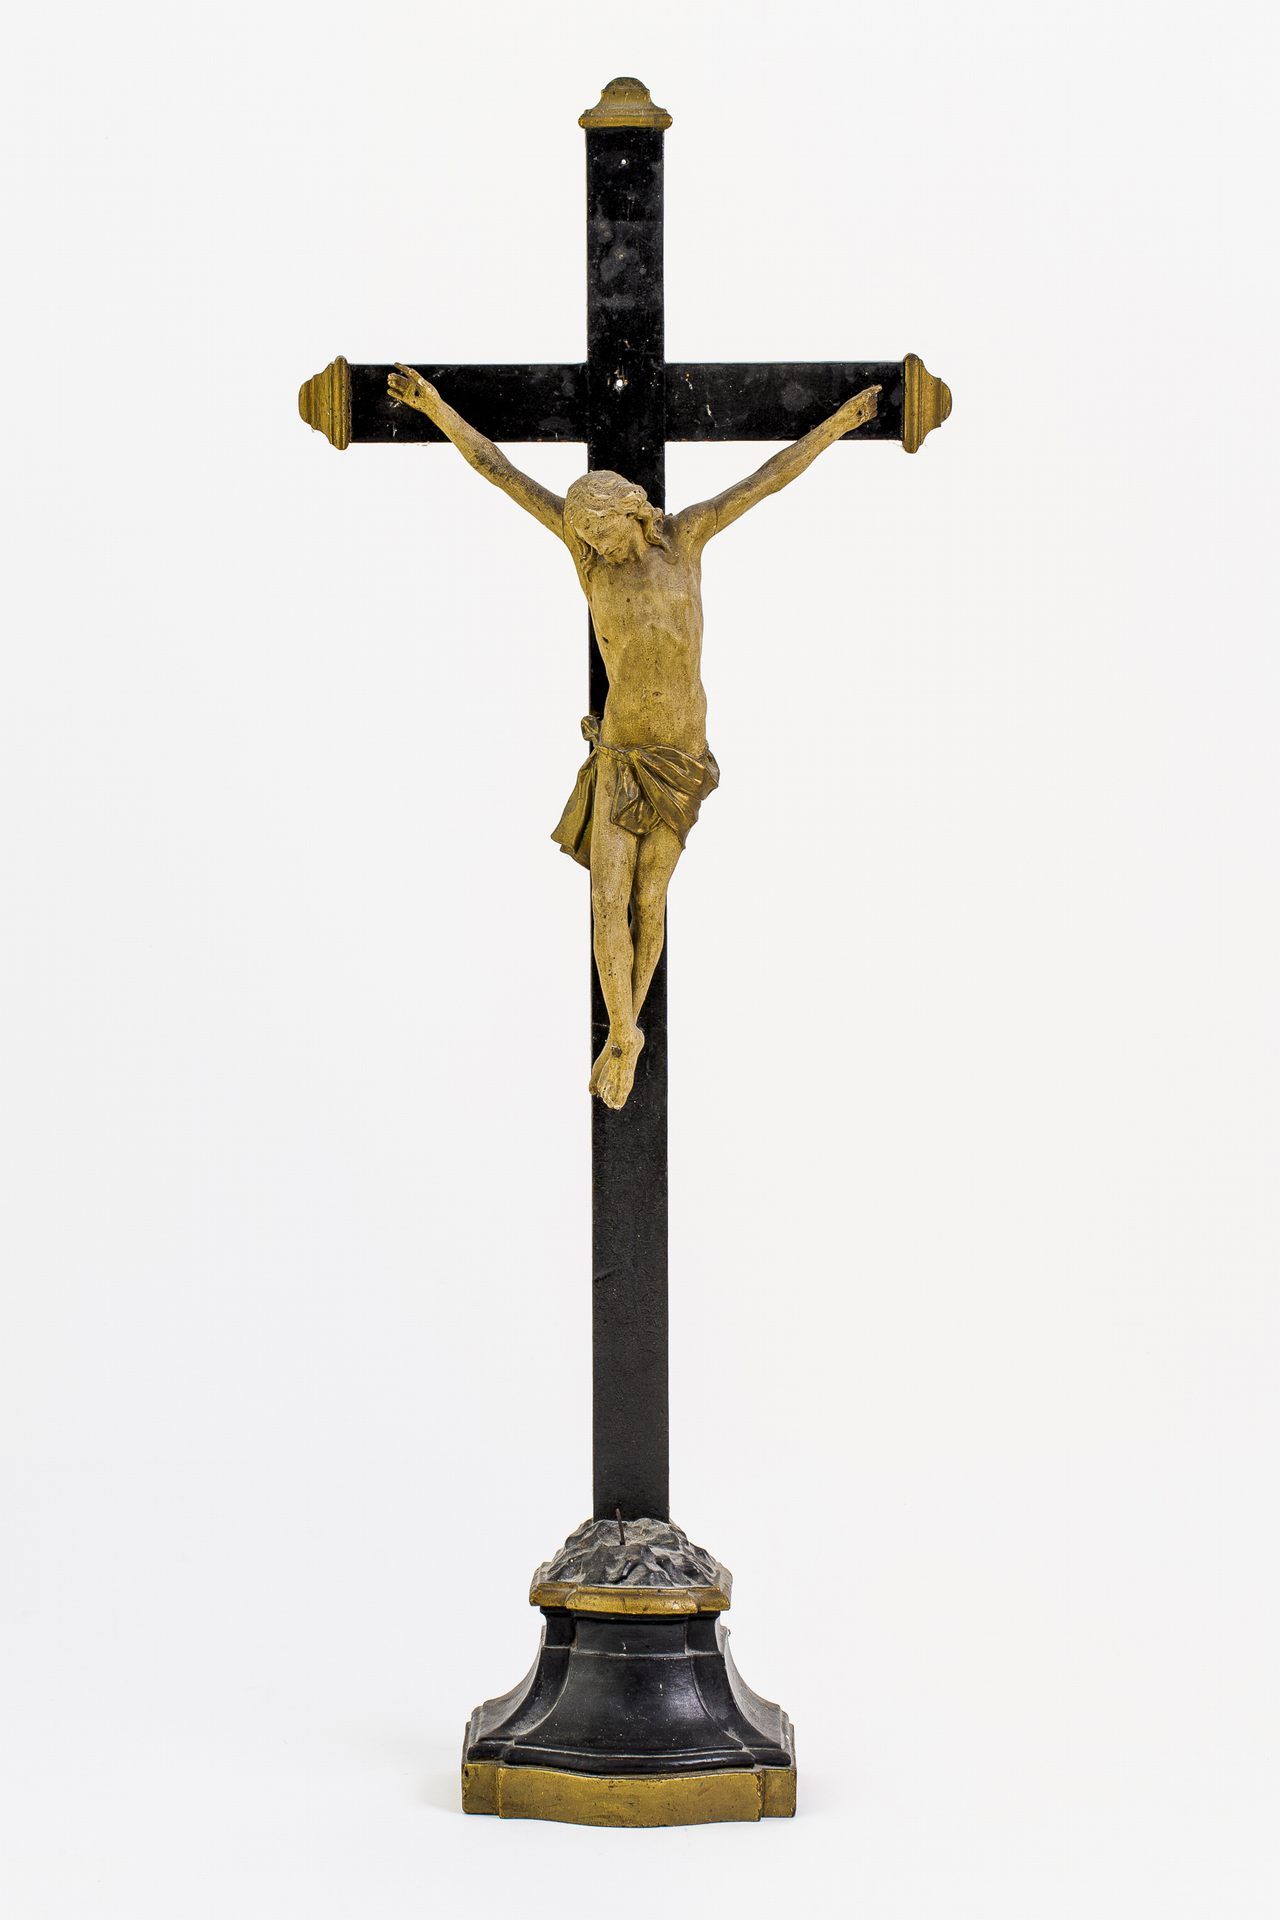 Standkruzifix - Image 2 of 2